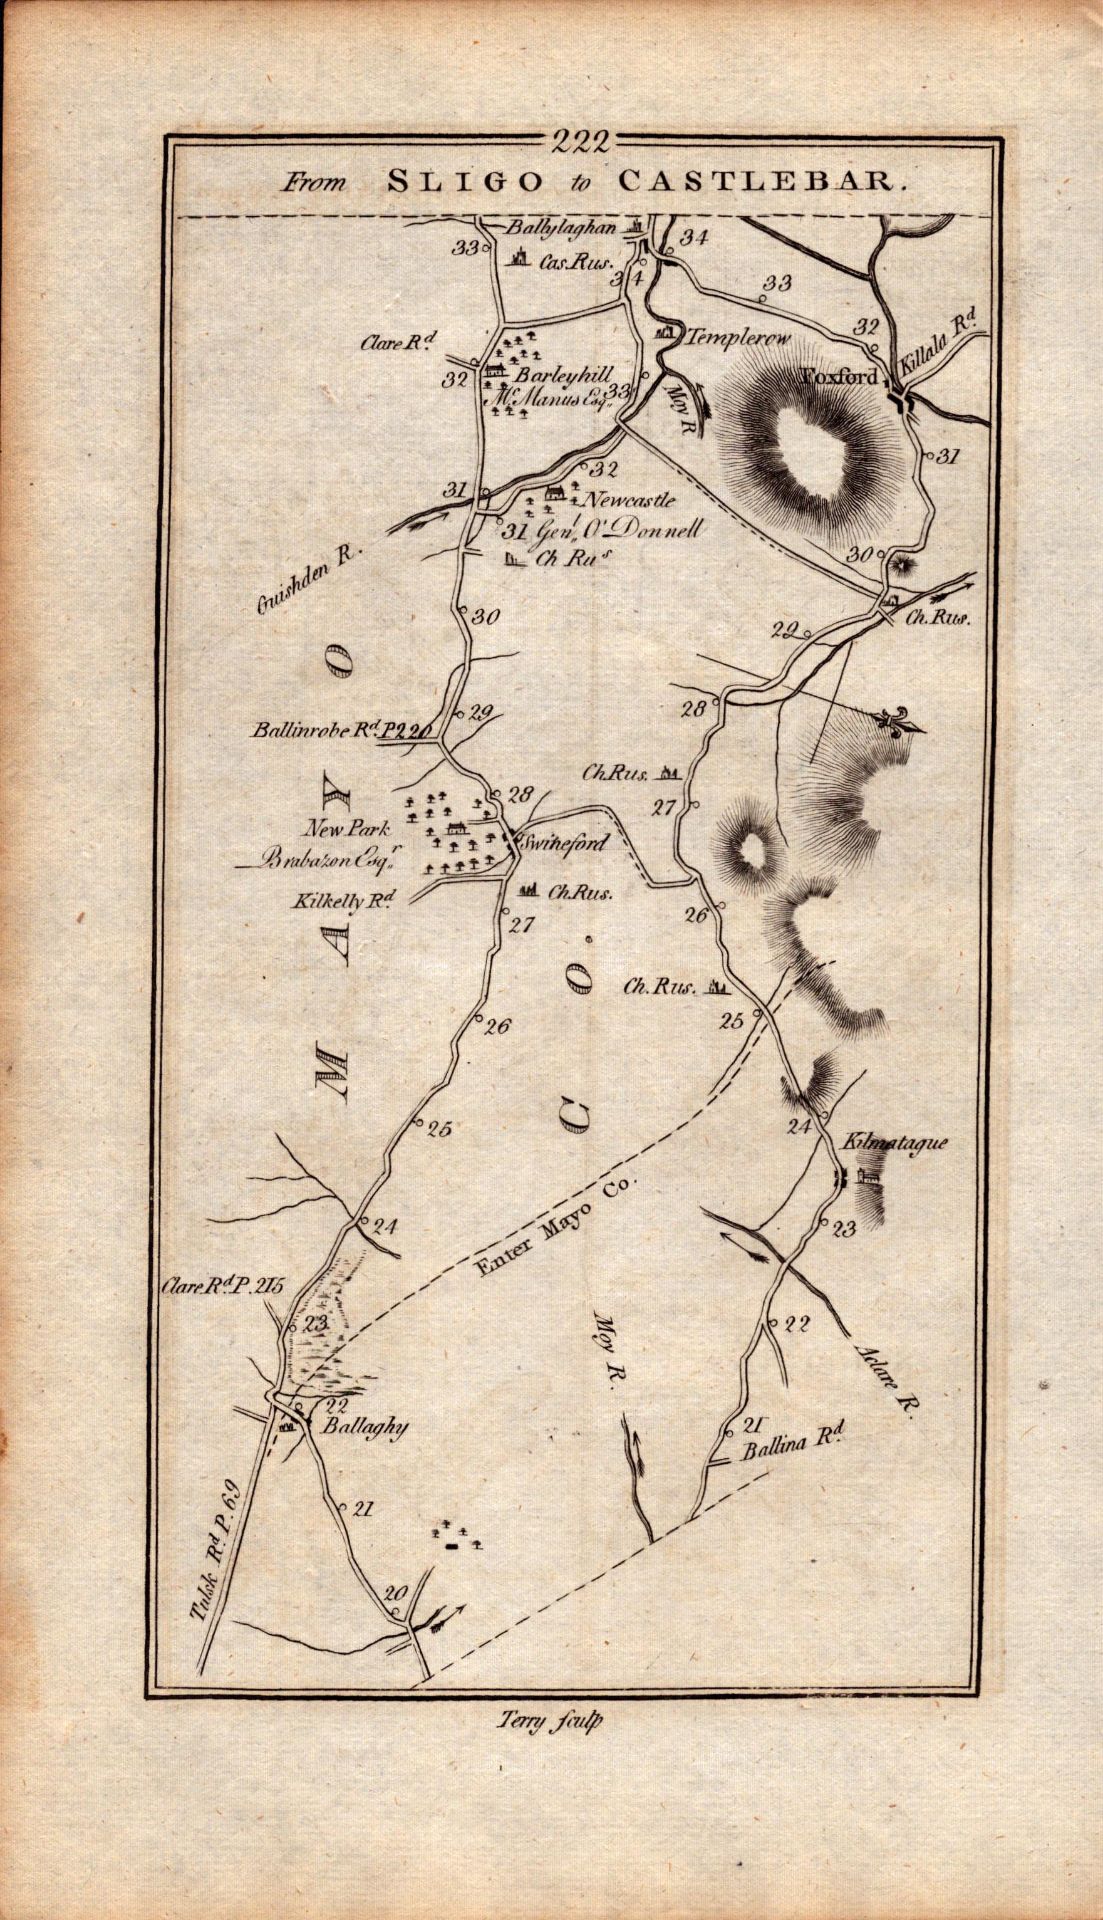 Ireland Rare Antique King George III 1777 Map Sligo Castlebar Tobercorry Co Mayo. - Image 3 of 4